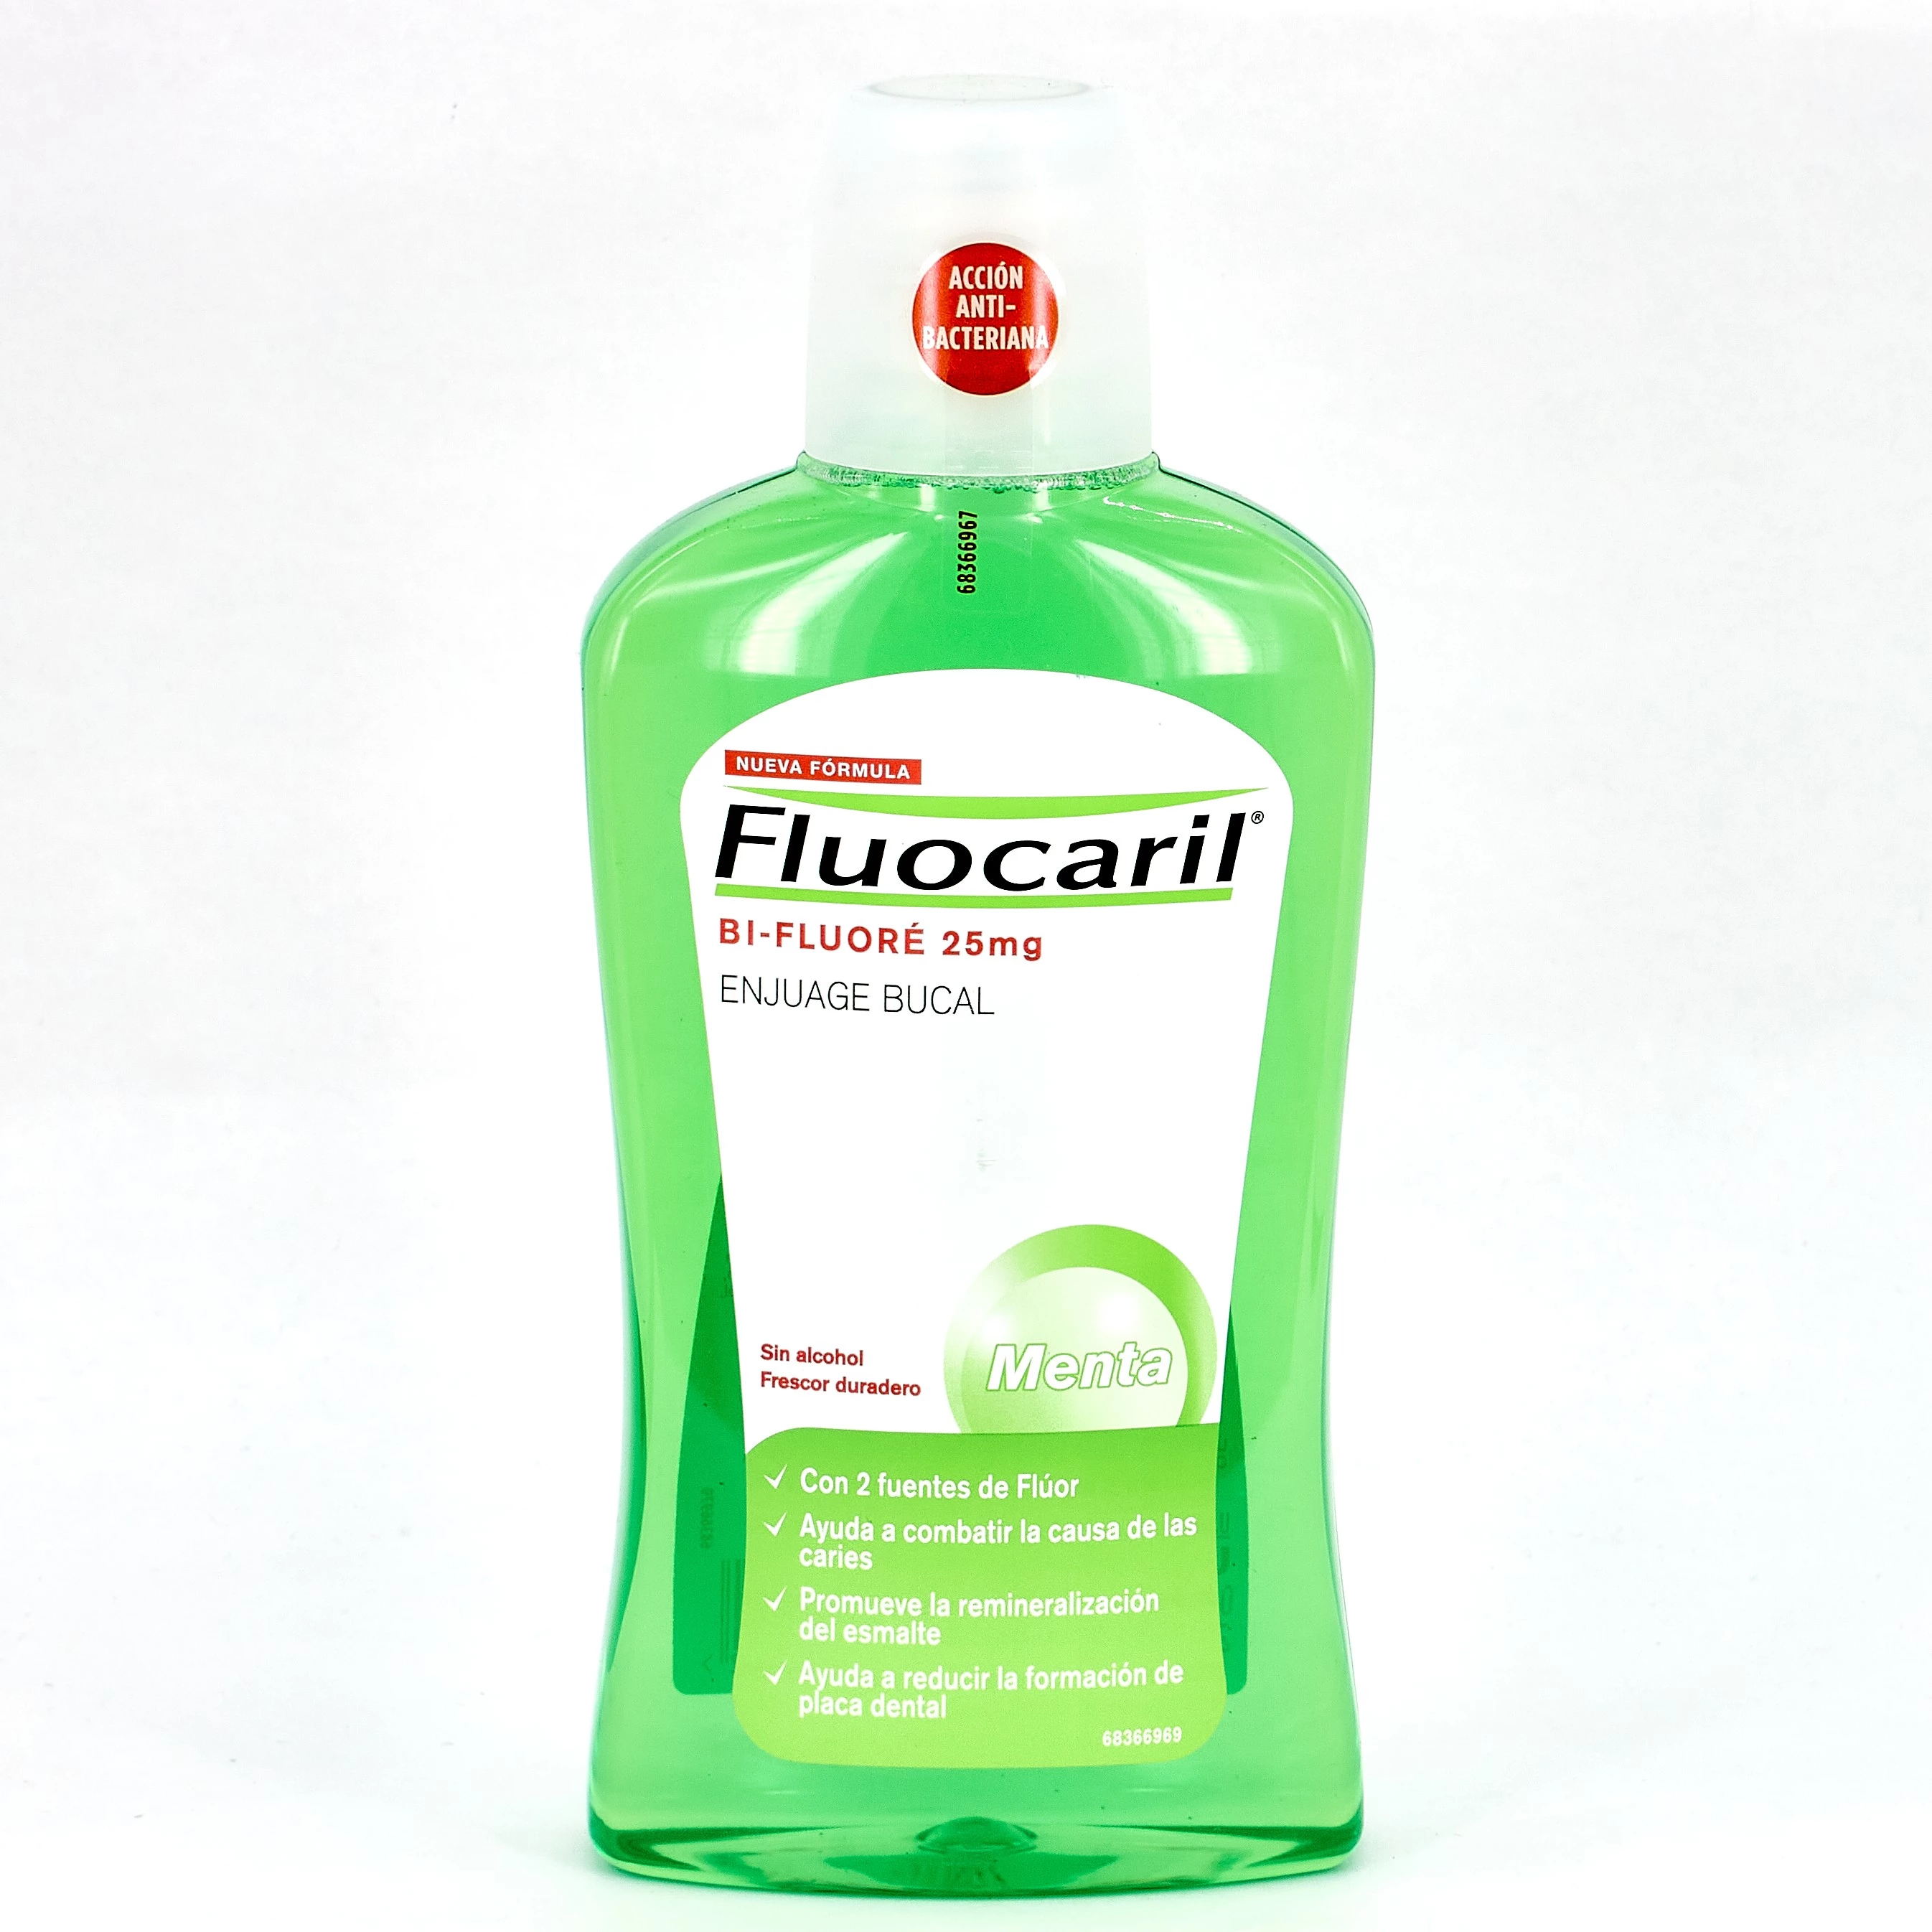 Fluocaril Bi-Fluore 250 mg Enjuague Bucal, 500ml.